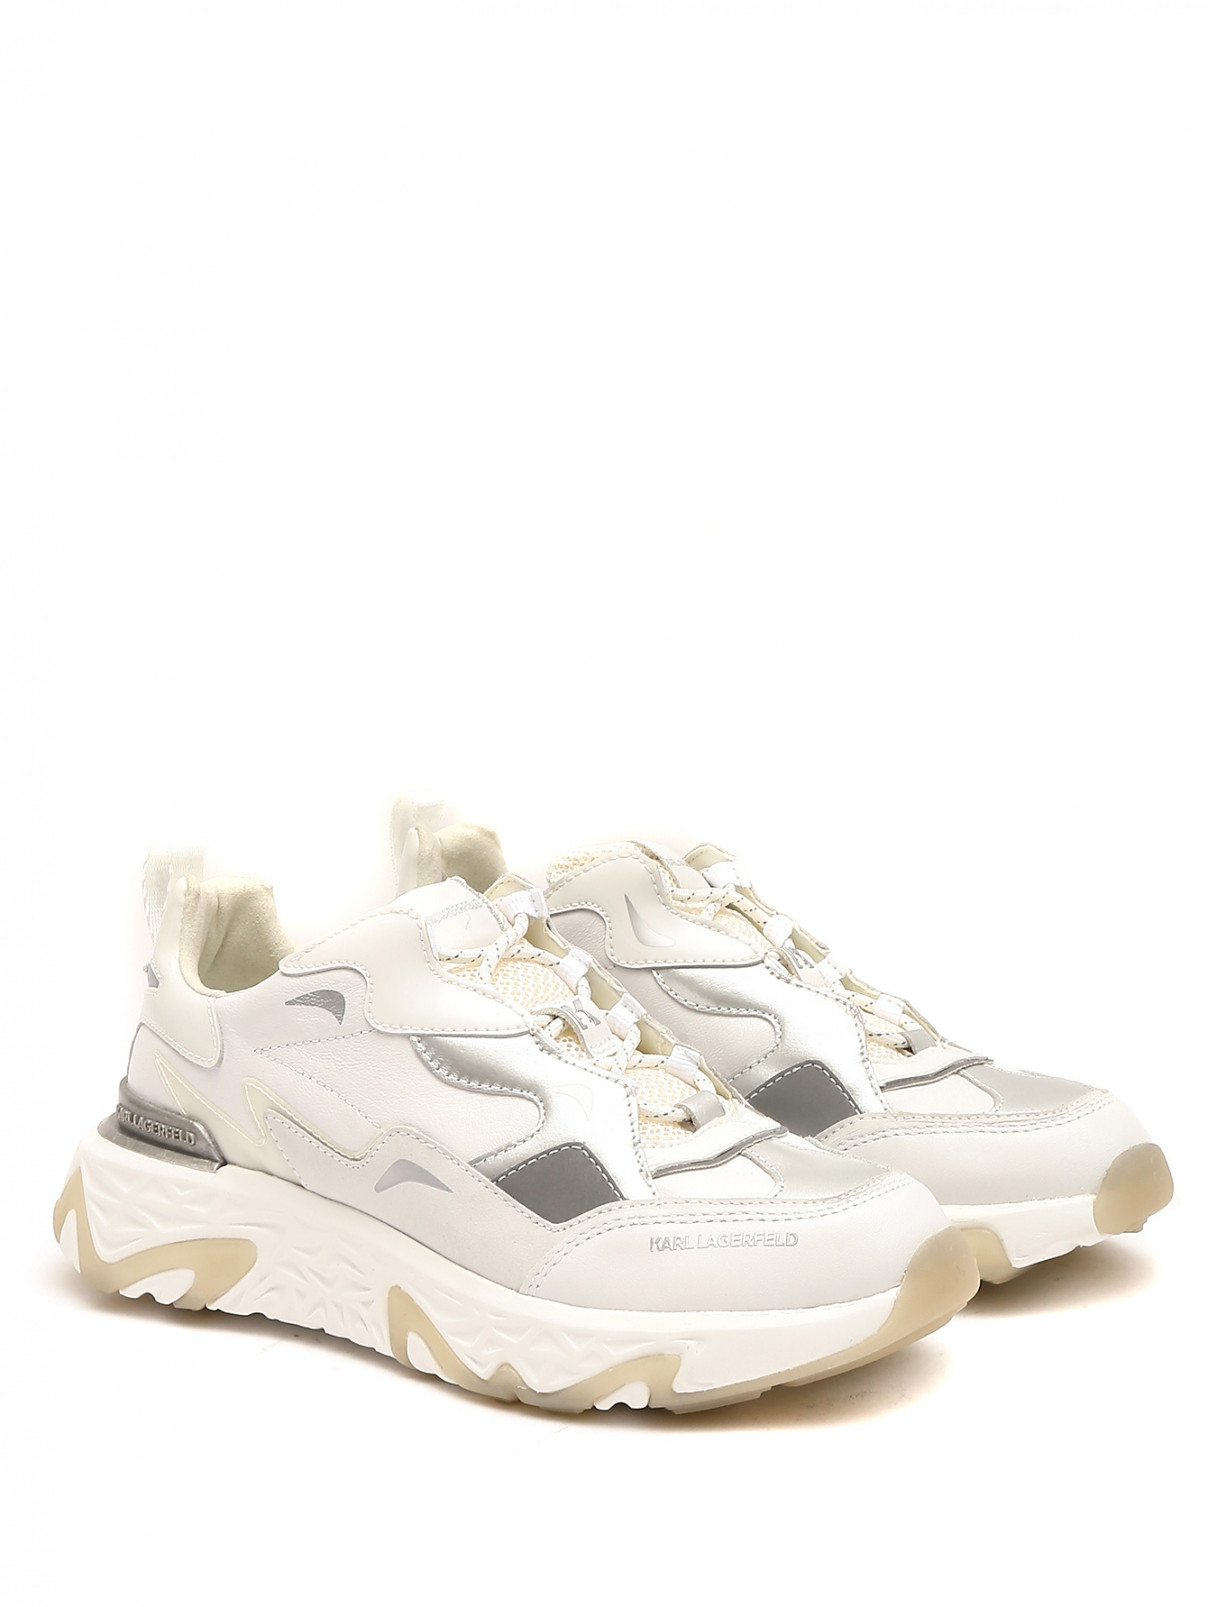 Кроссовки на массивной подошве на шнурках Karl Lagerfeld  –  Общий вид  – Цвет:  Белый